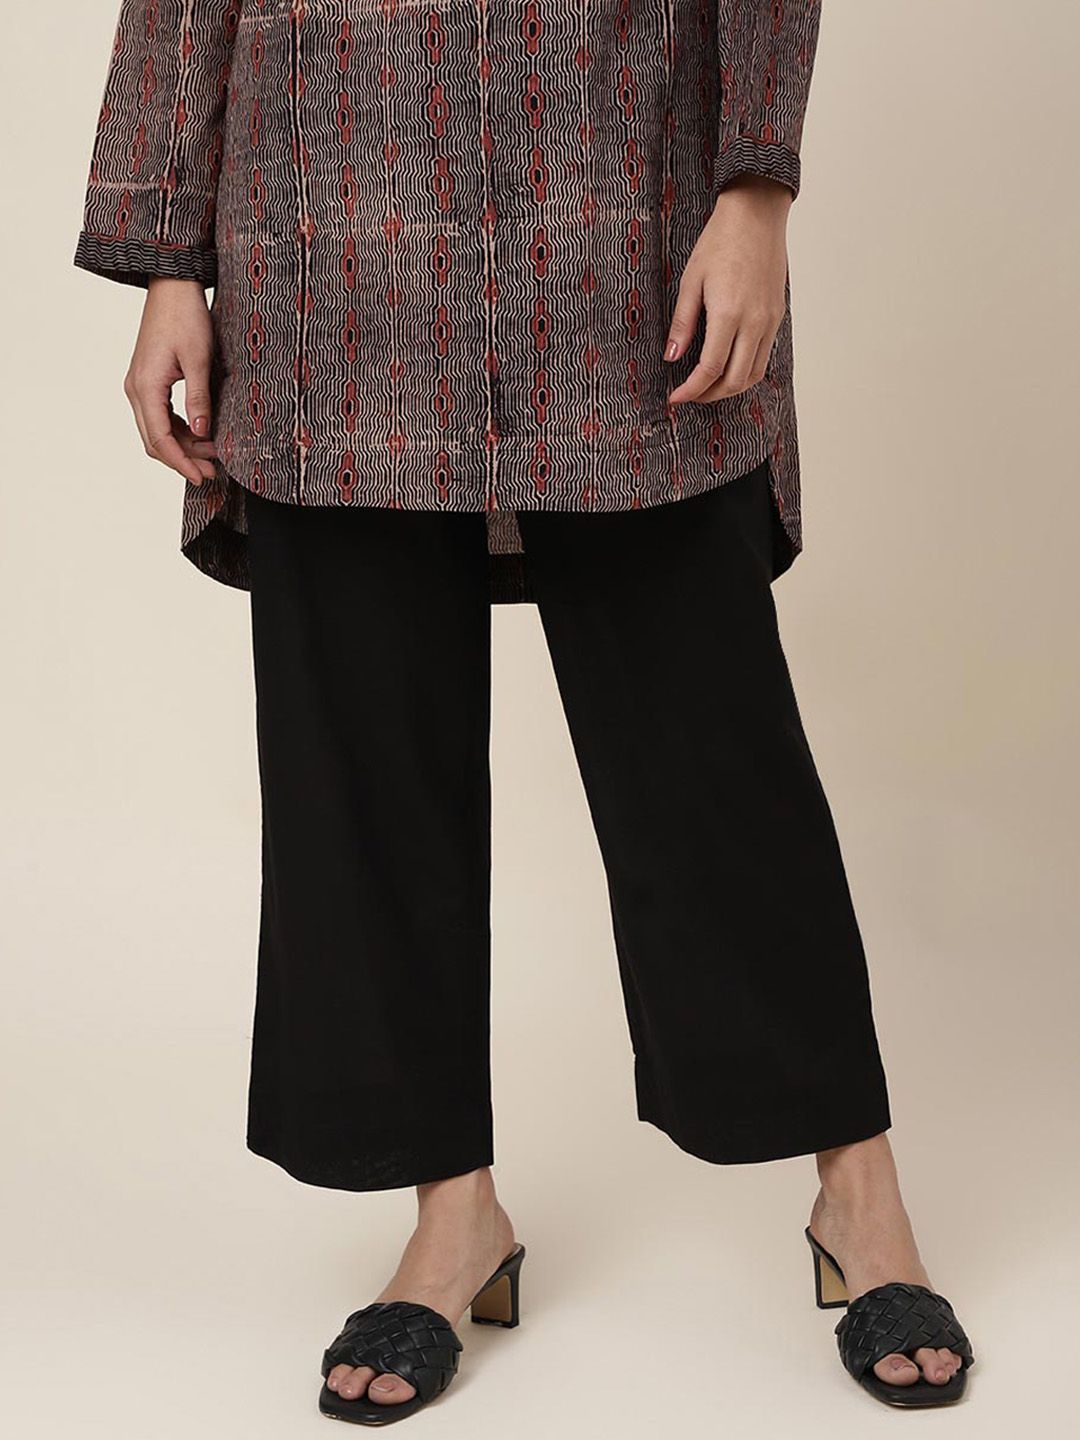 Fabindia Women Black Cotton Culottes Trousers Price in India